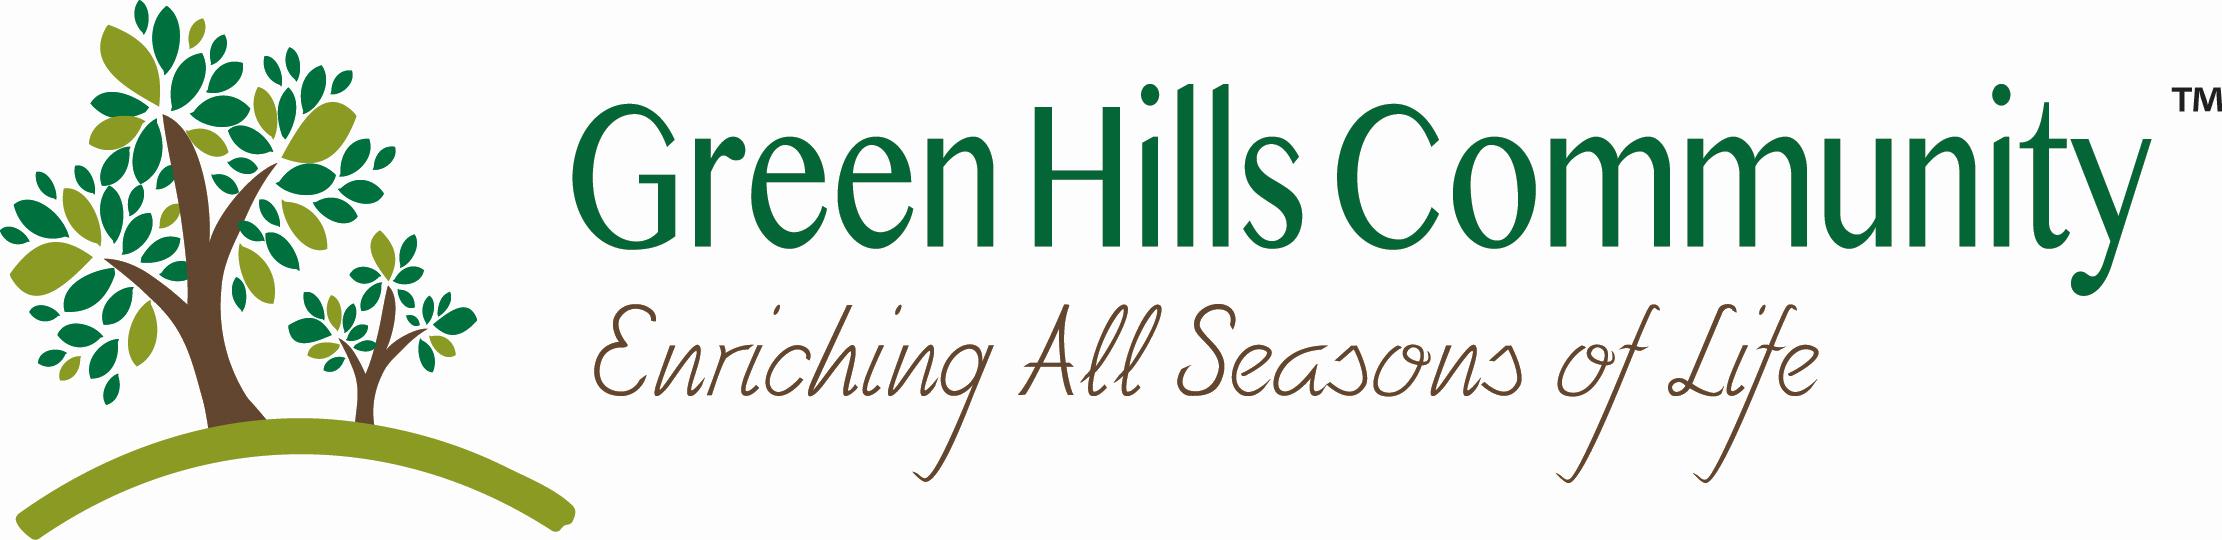 Green Hills Community West Liberty logo